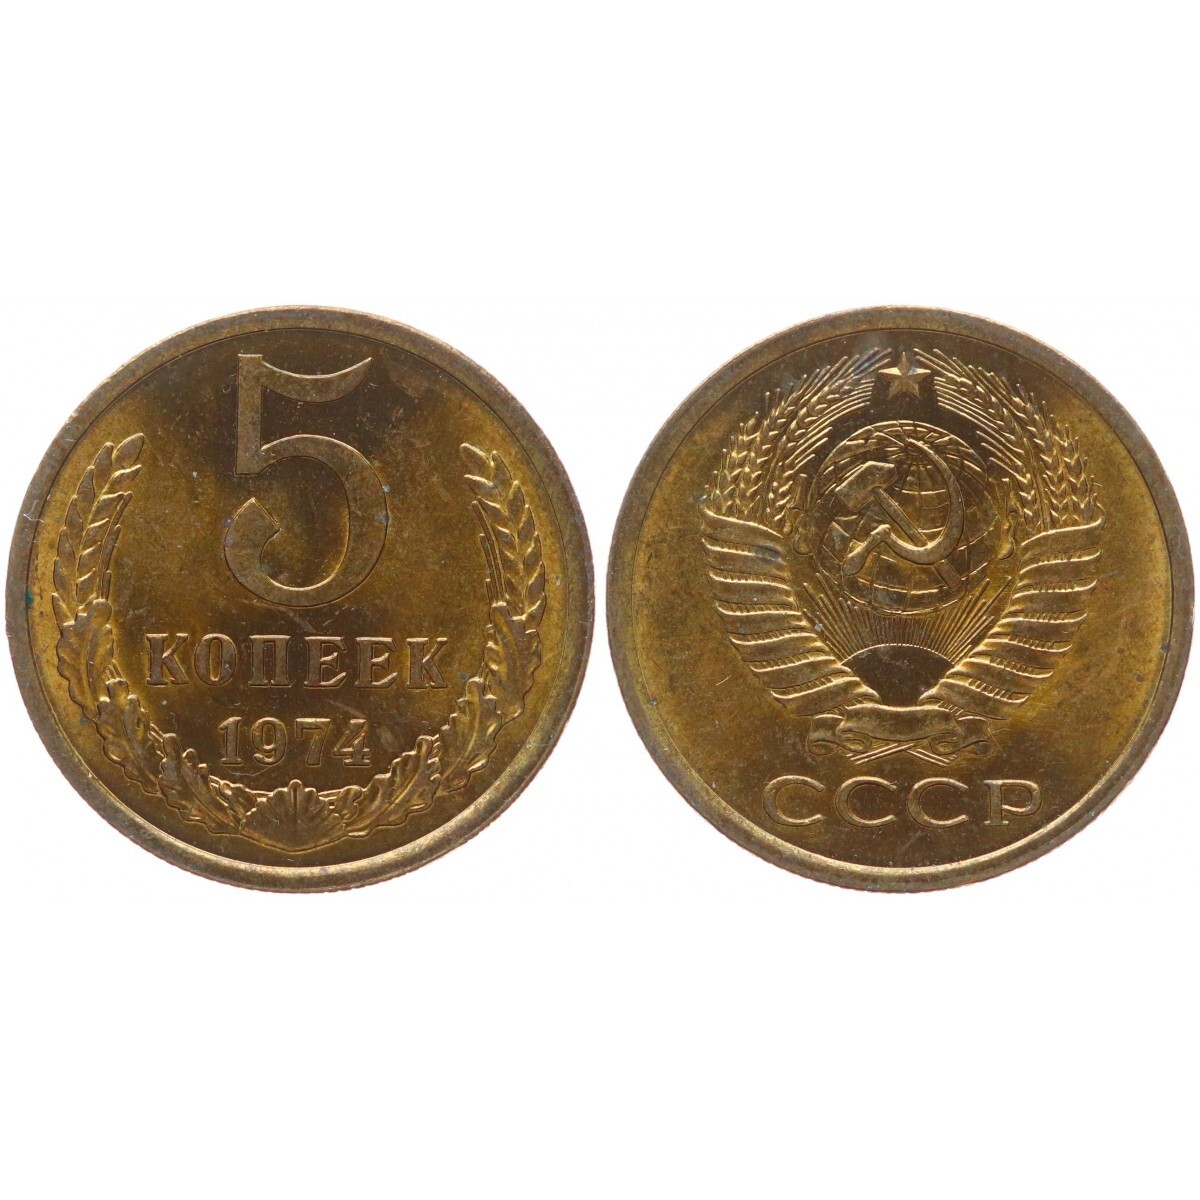 5 копеек 1961 года ссср цены. 5 Копеек 1961 СССР. 5 Копеек 1961 года. Монета 5 копеек 1961. 5 Копеек 1961 медные.